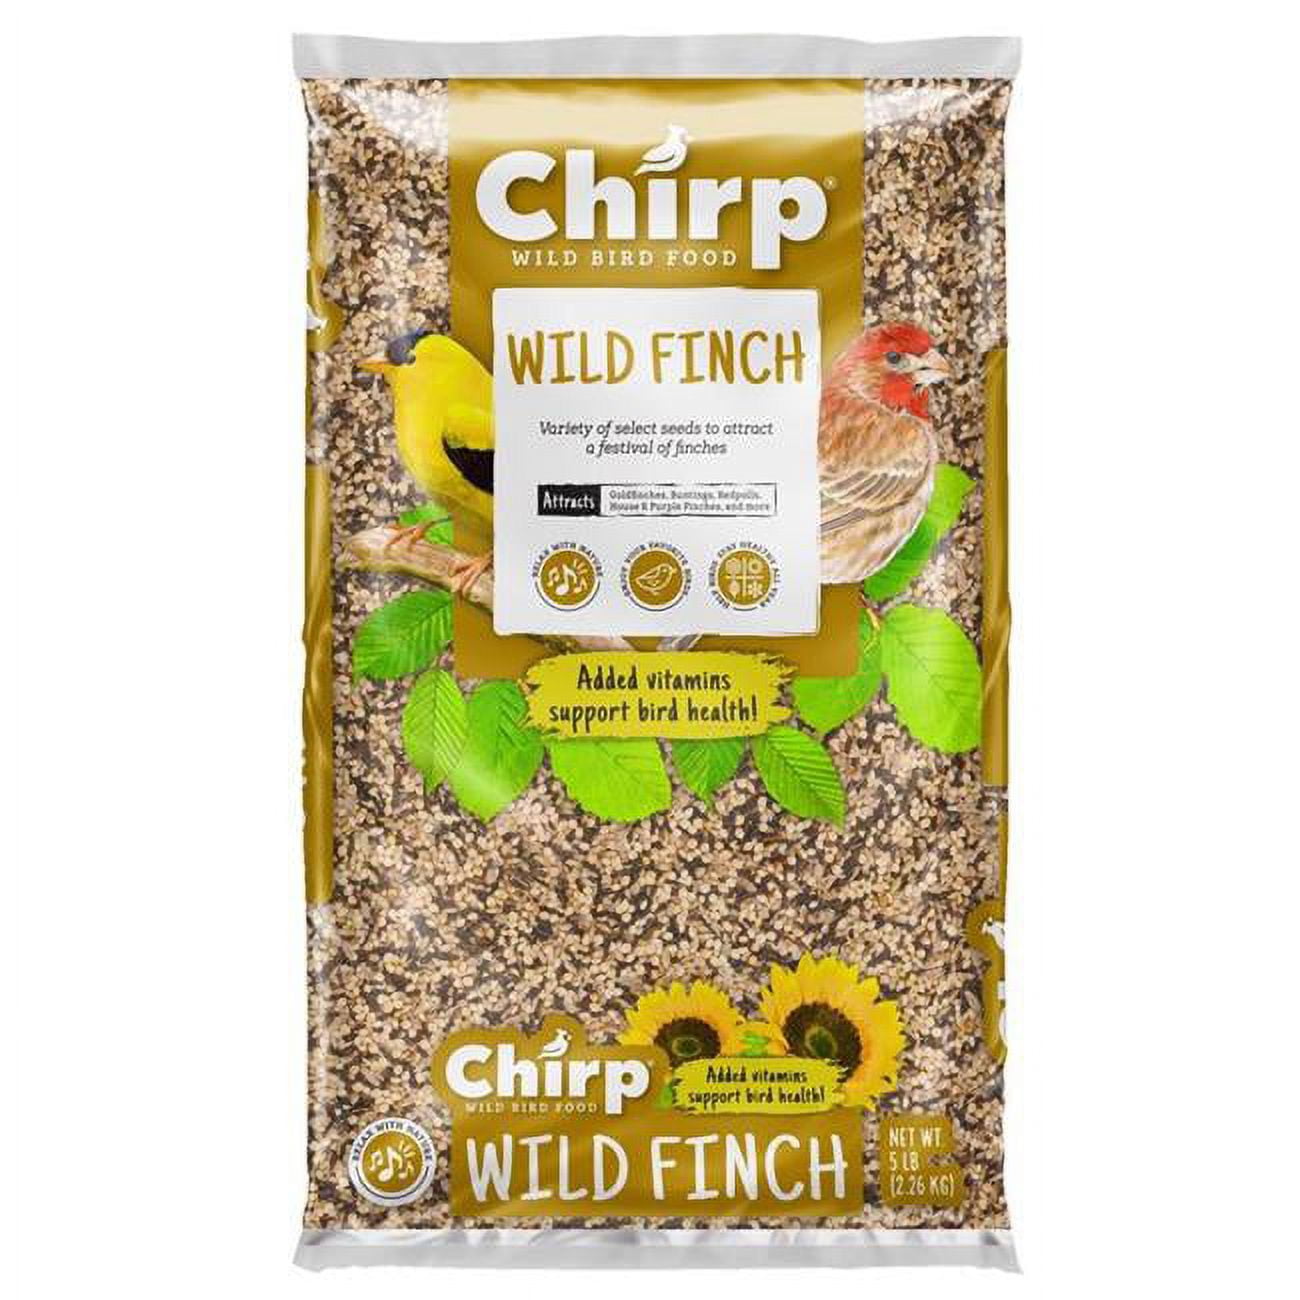 Picture of Chirp 9087763 5 lbs Wild Finch Millet Wild Bird Food